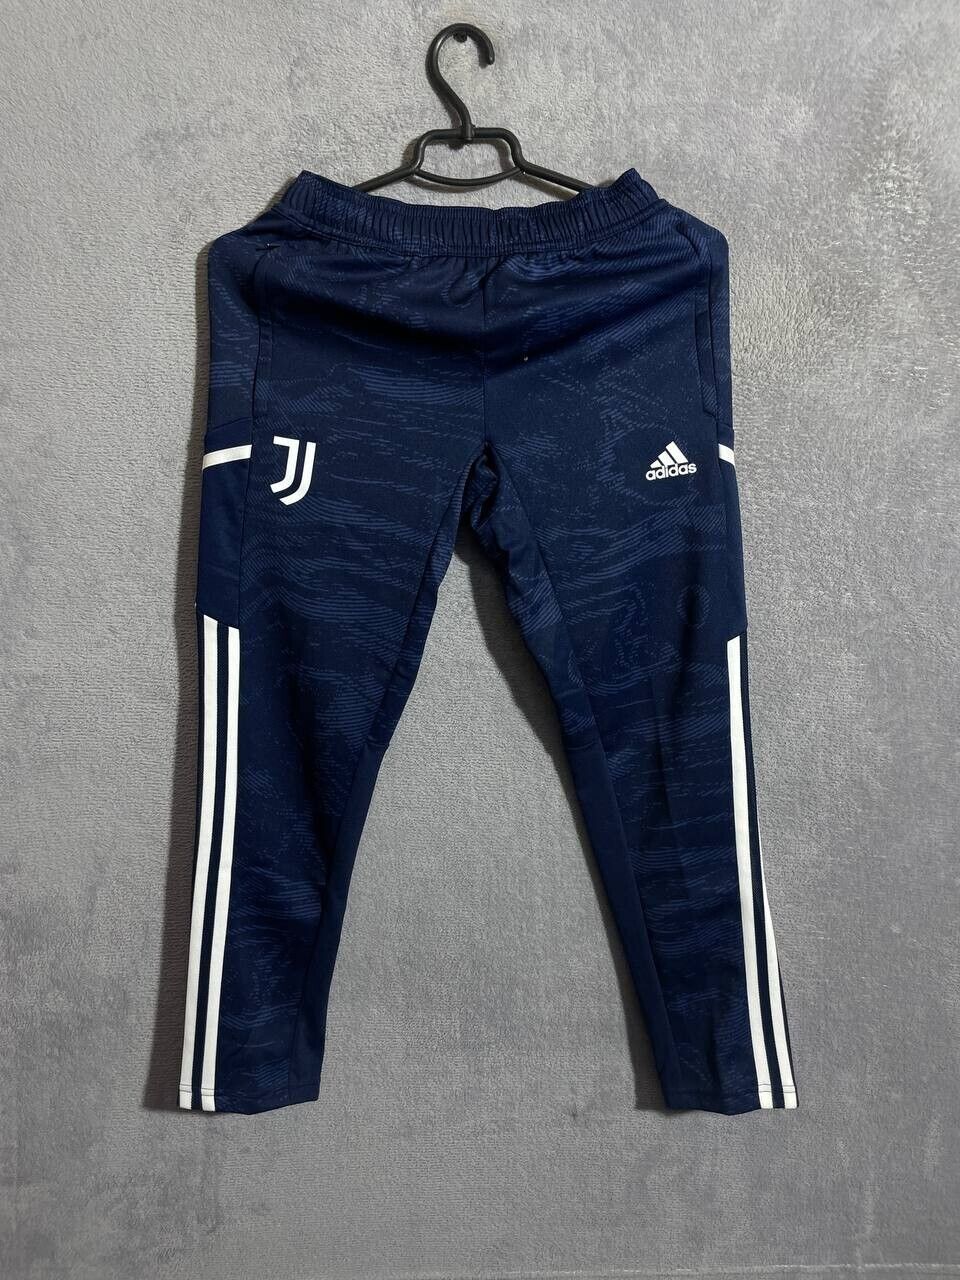 Juventus Training Football Pants Blue Adidas HCC3289 Young Size M 11-12YRS